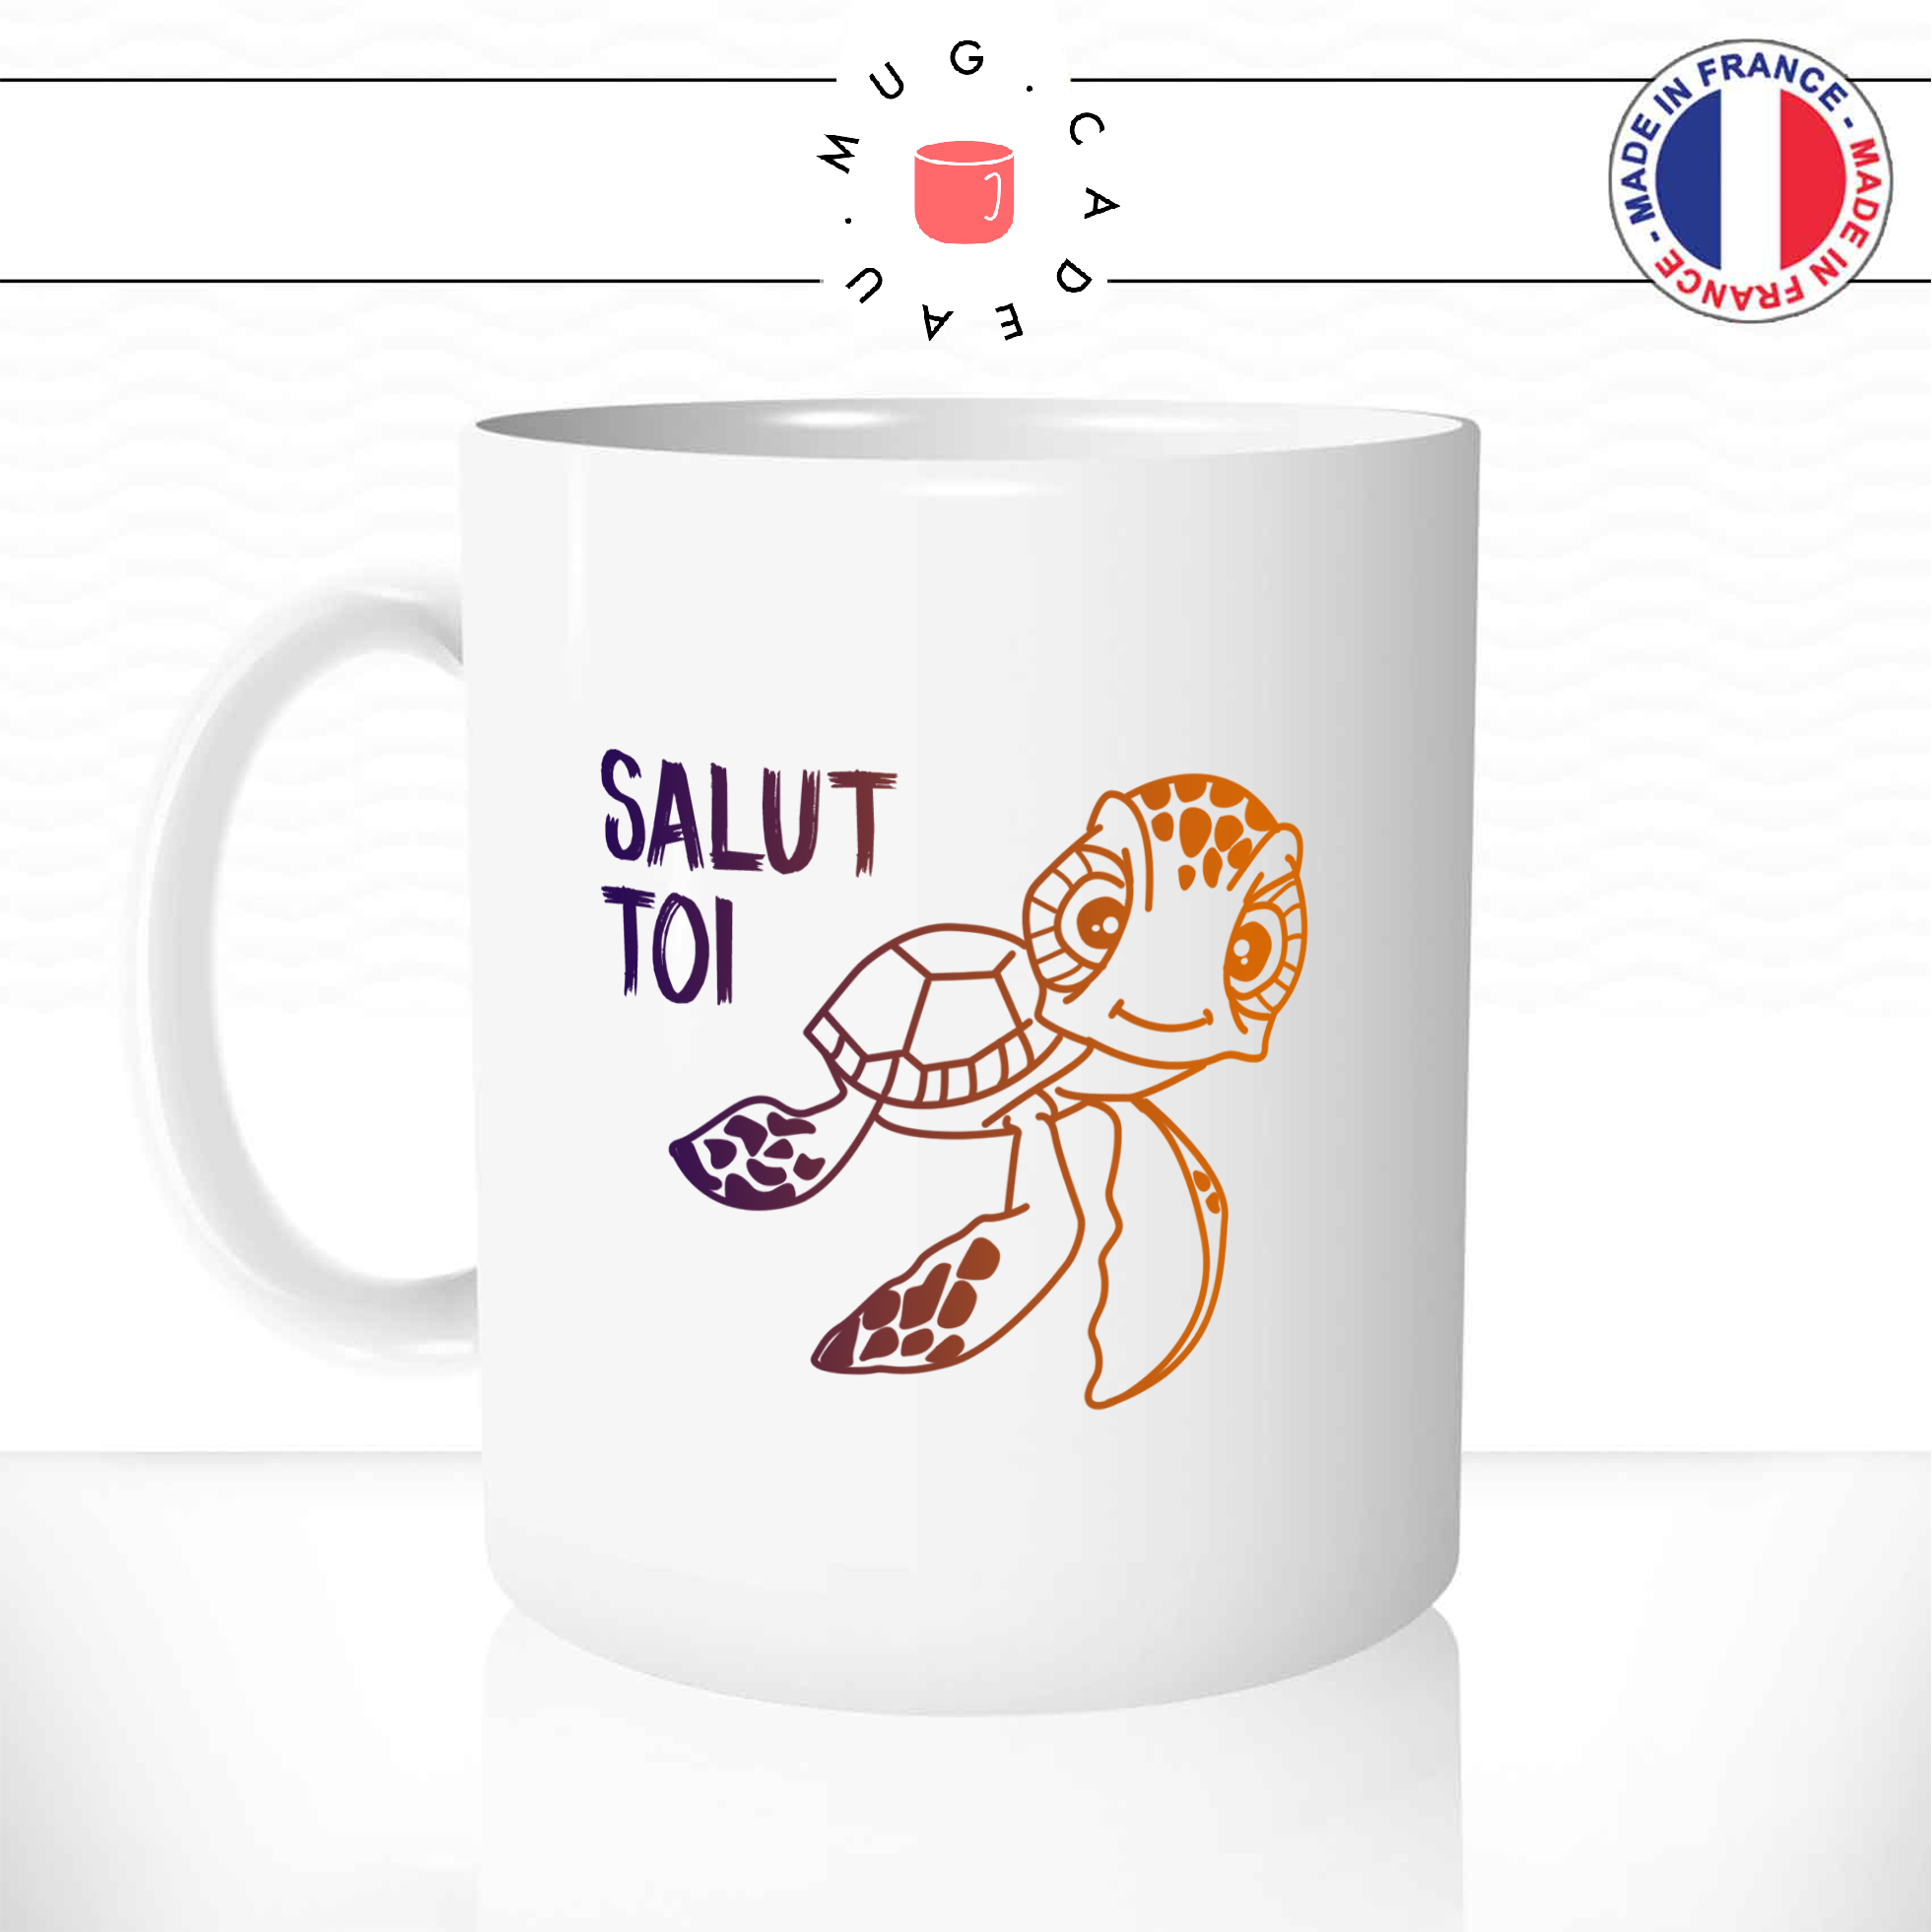 mug-tasse-ref3-tortue-multicolore-enfant-dessin-animé-mignon-salut-toi-cafe-the-mugs-tasses-personnalise-anse-gauche